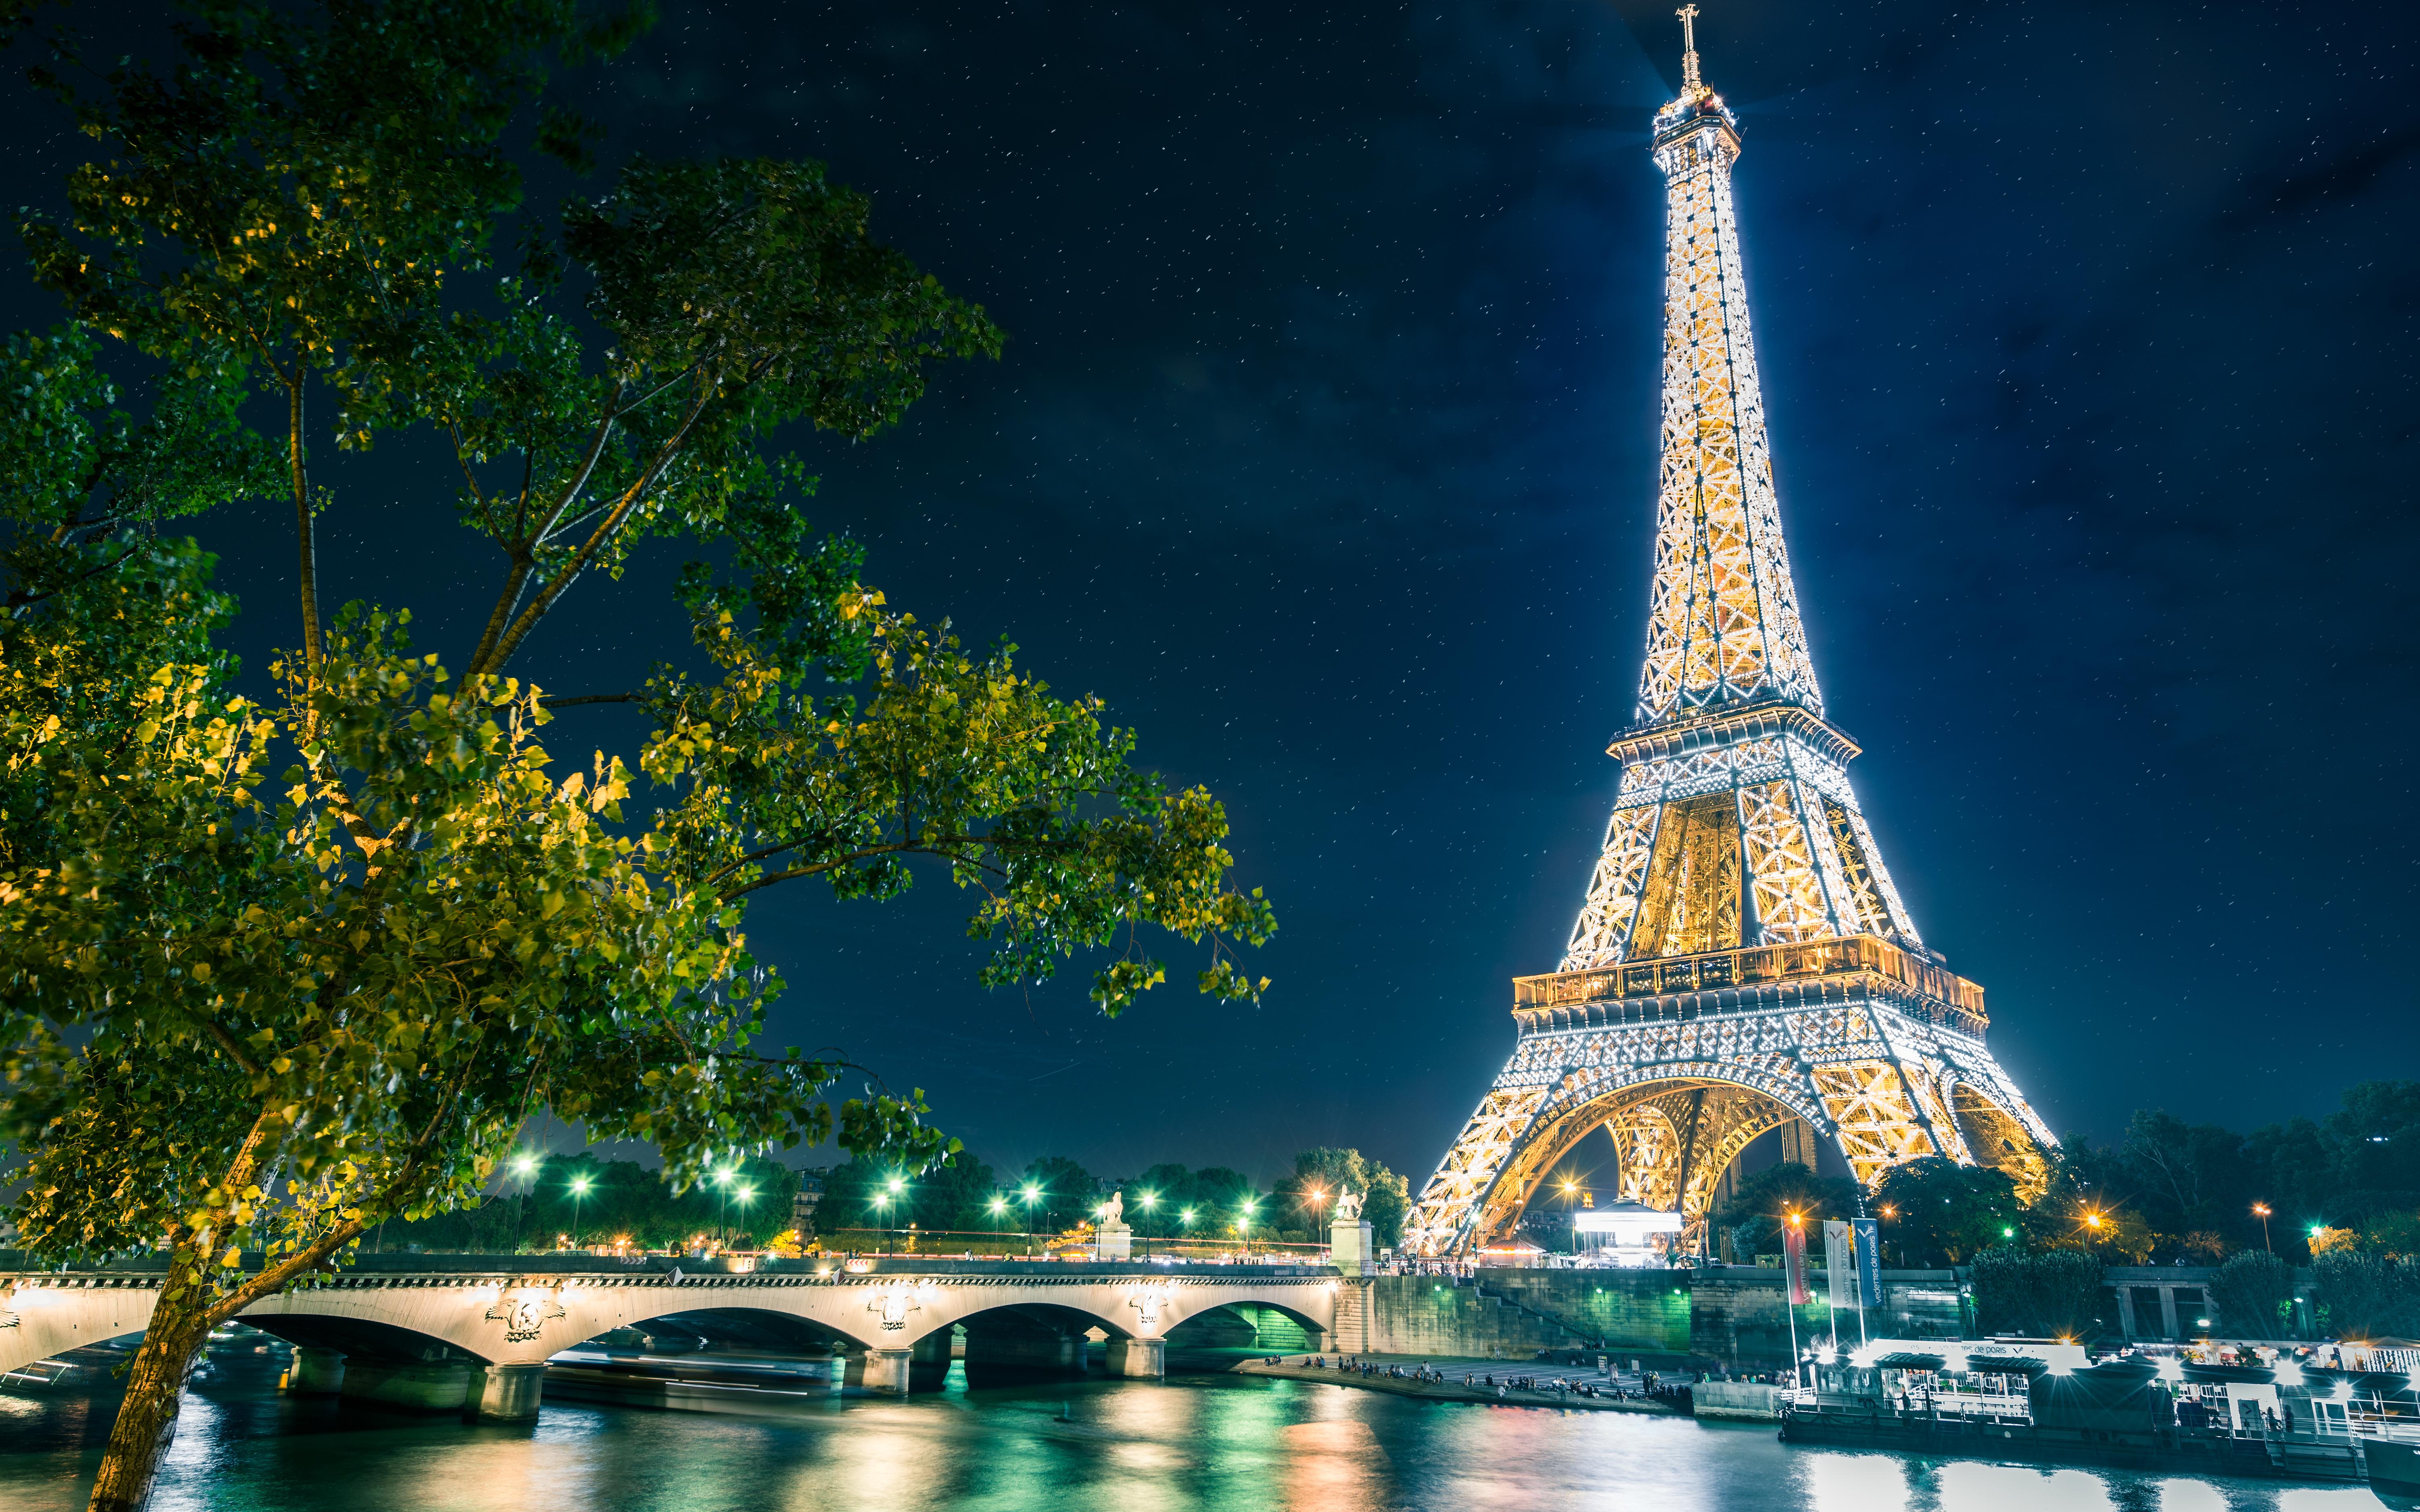 Обои на главную на телефон. Эйфелева башня в Париже. Париж Эйфелева башня ночью. Эйфель башня ночью. Франция эфельная башня.